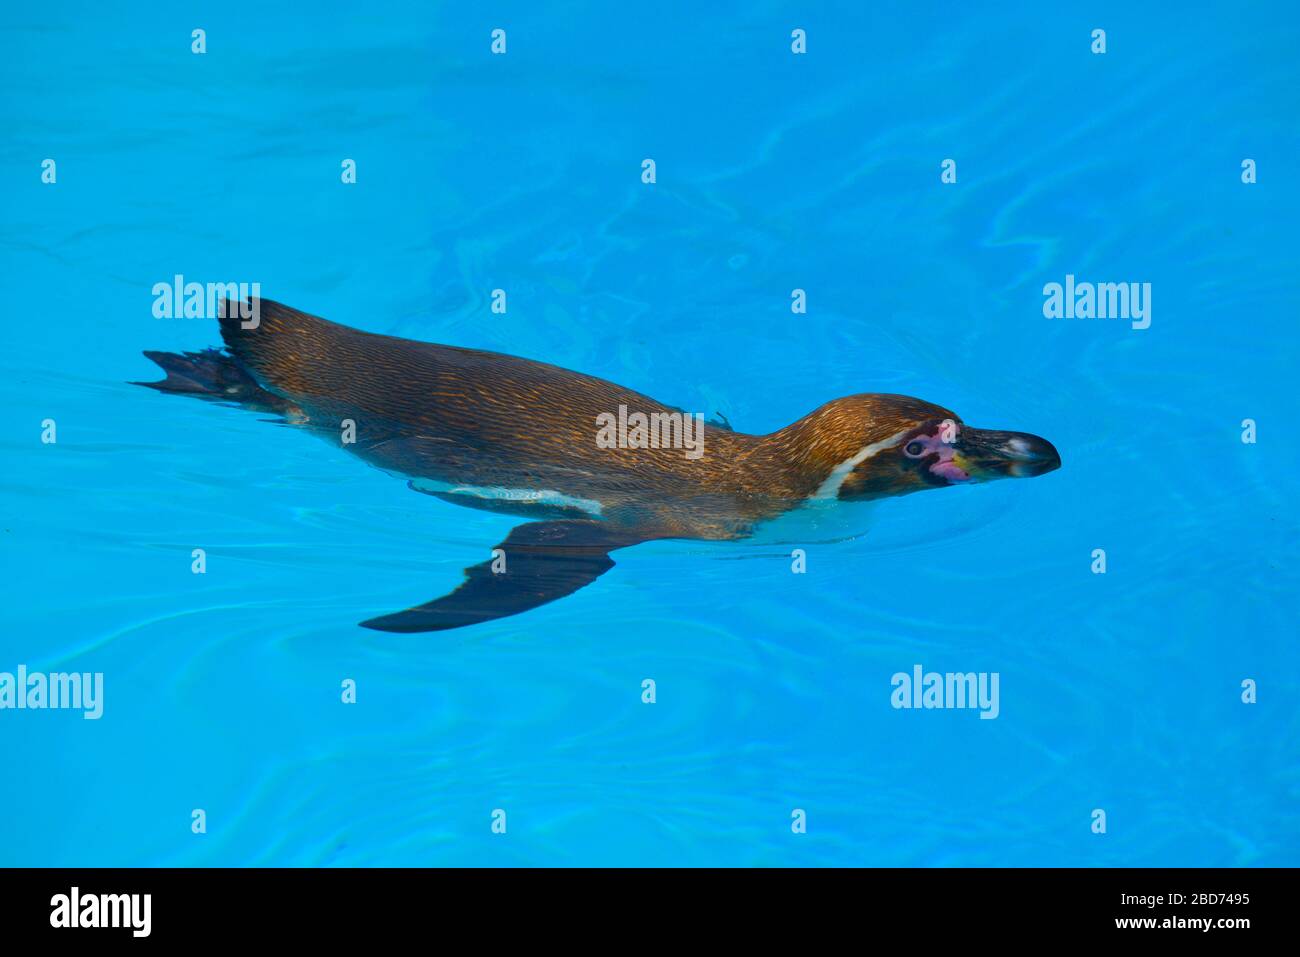 Humboldt pinguino (Sfeniscus humboldti) nuoto su acqua blu vista dall'alto Foto Stock